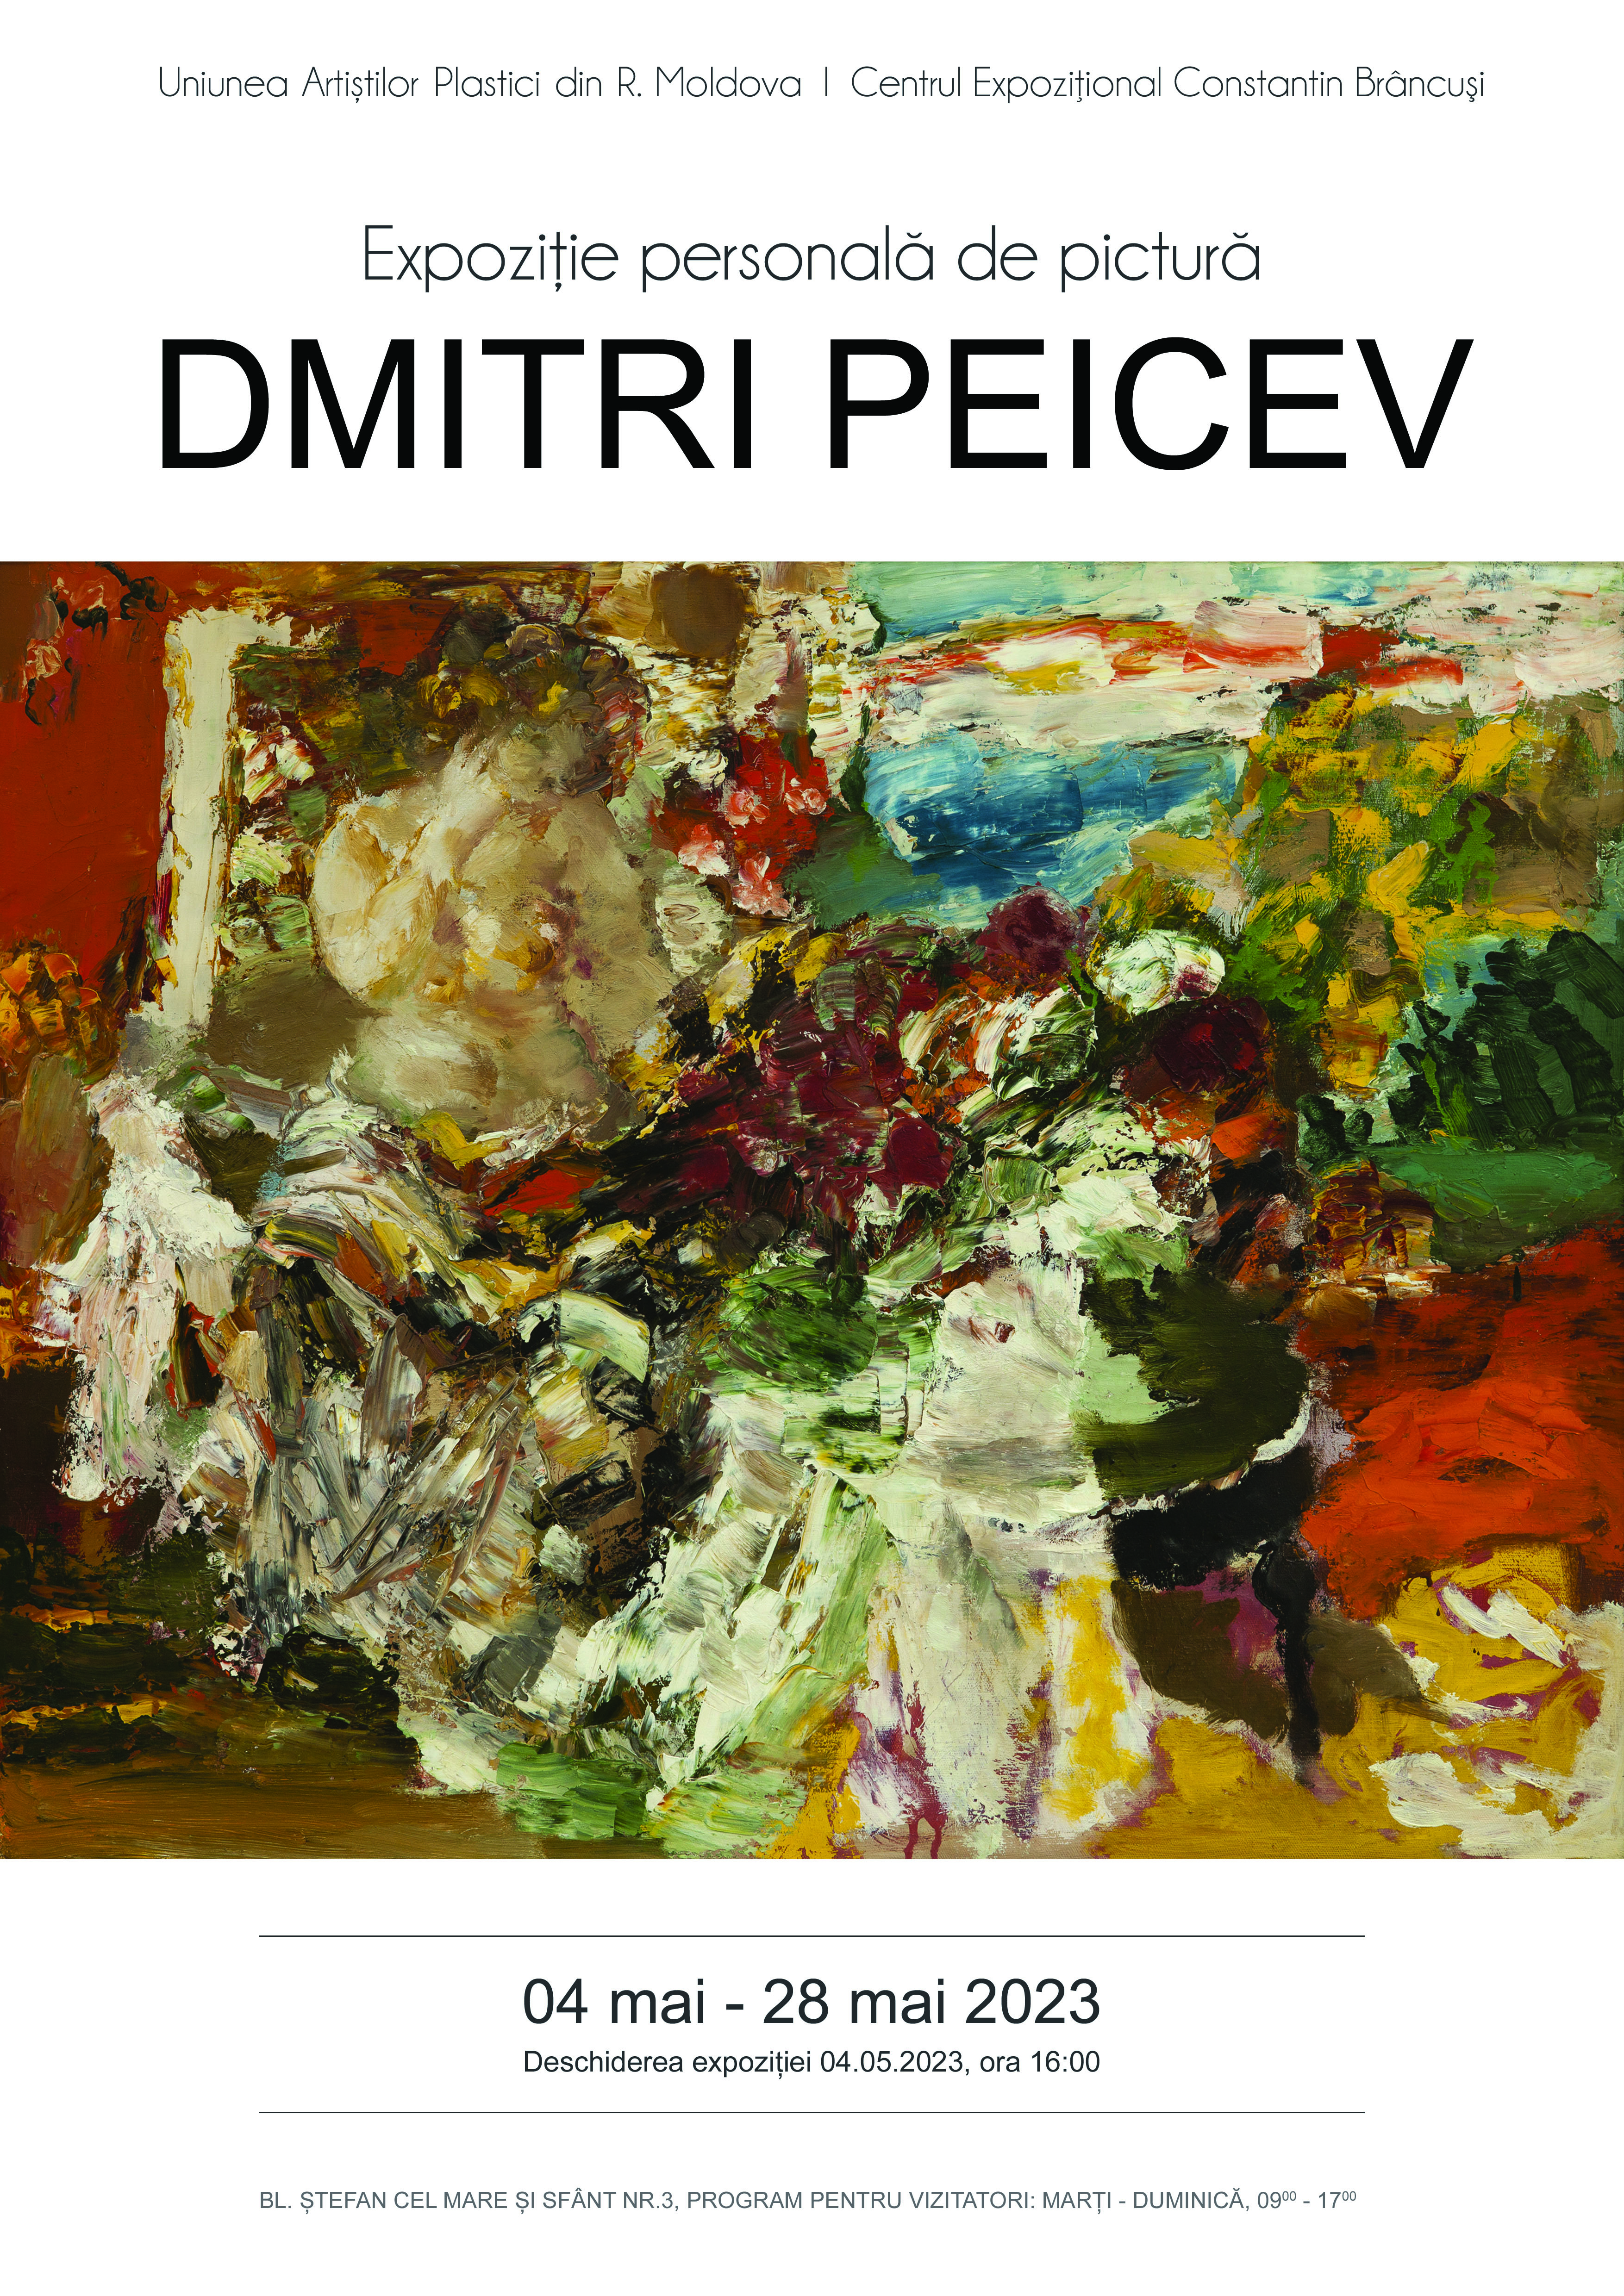 Dmitri Peicev